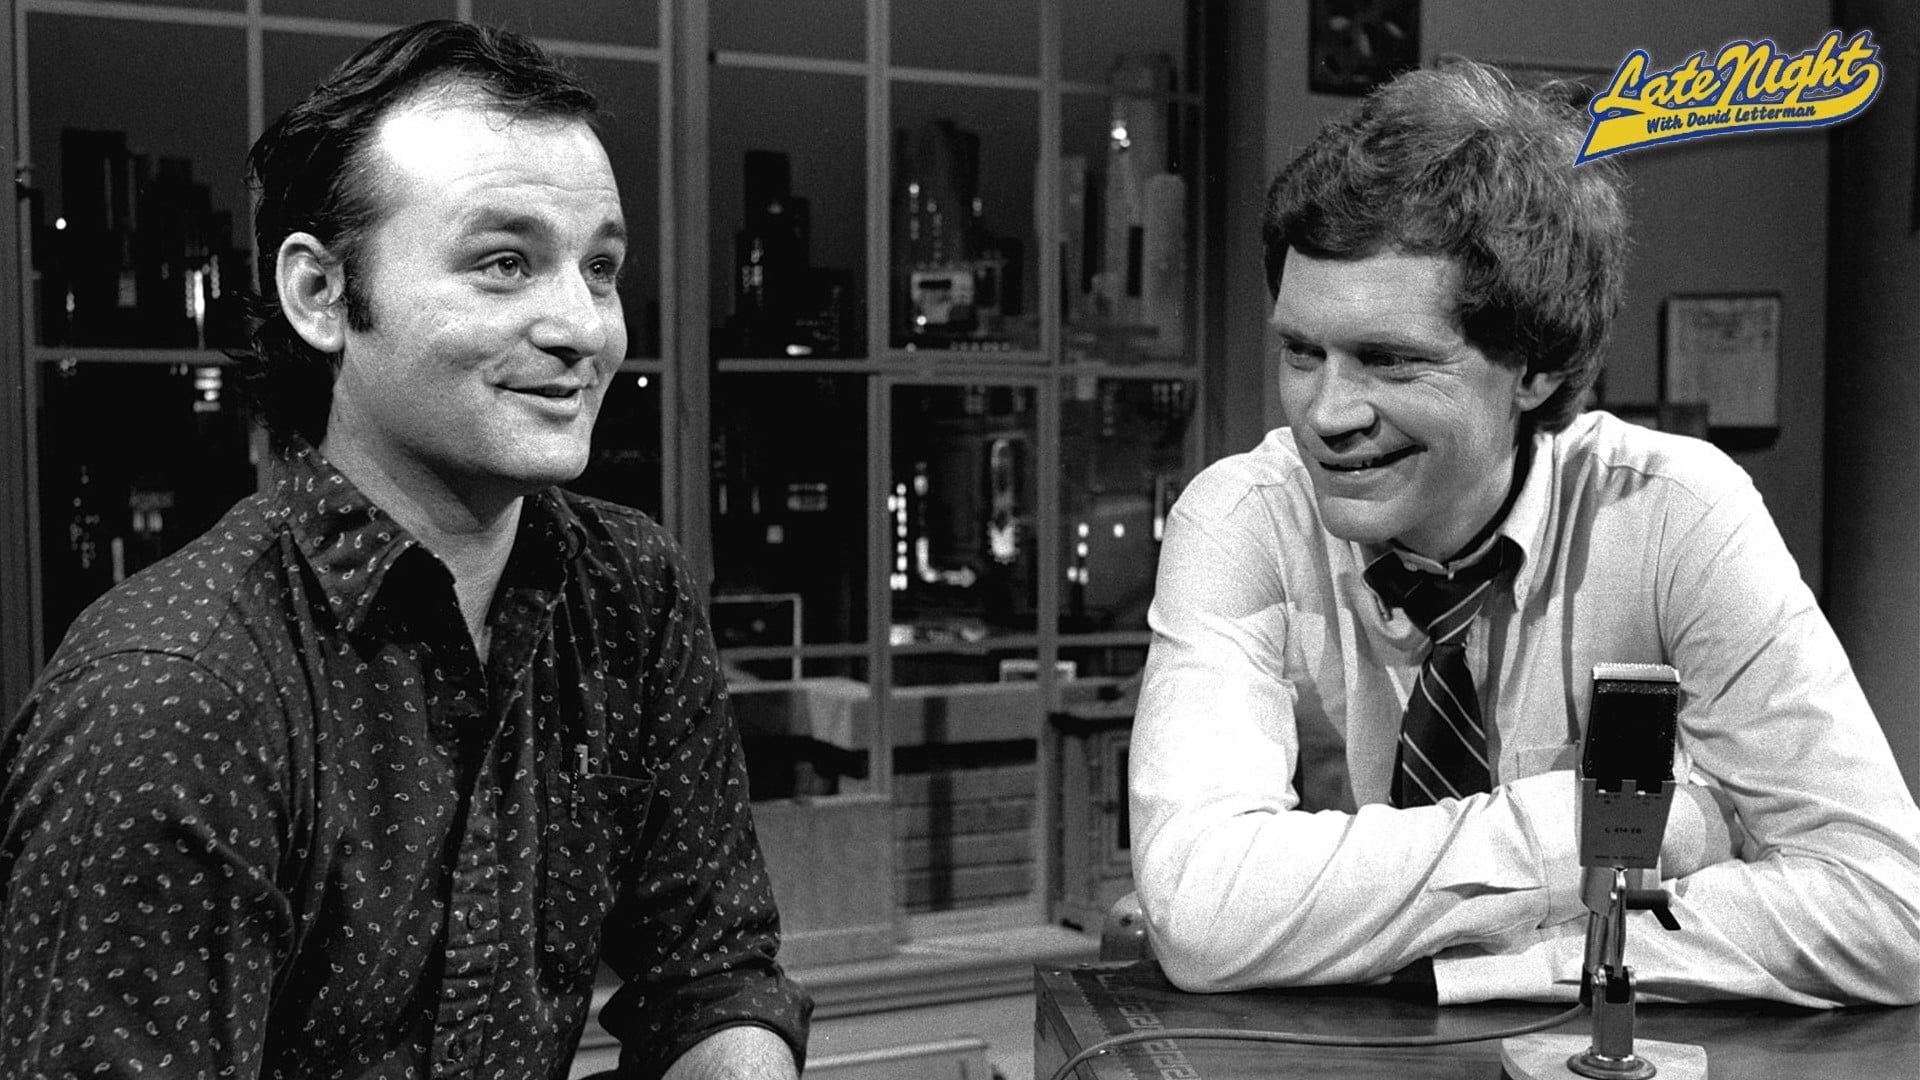 Late Night with David Letterman - Staffel 8 (1970)